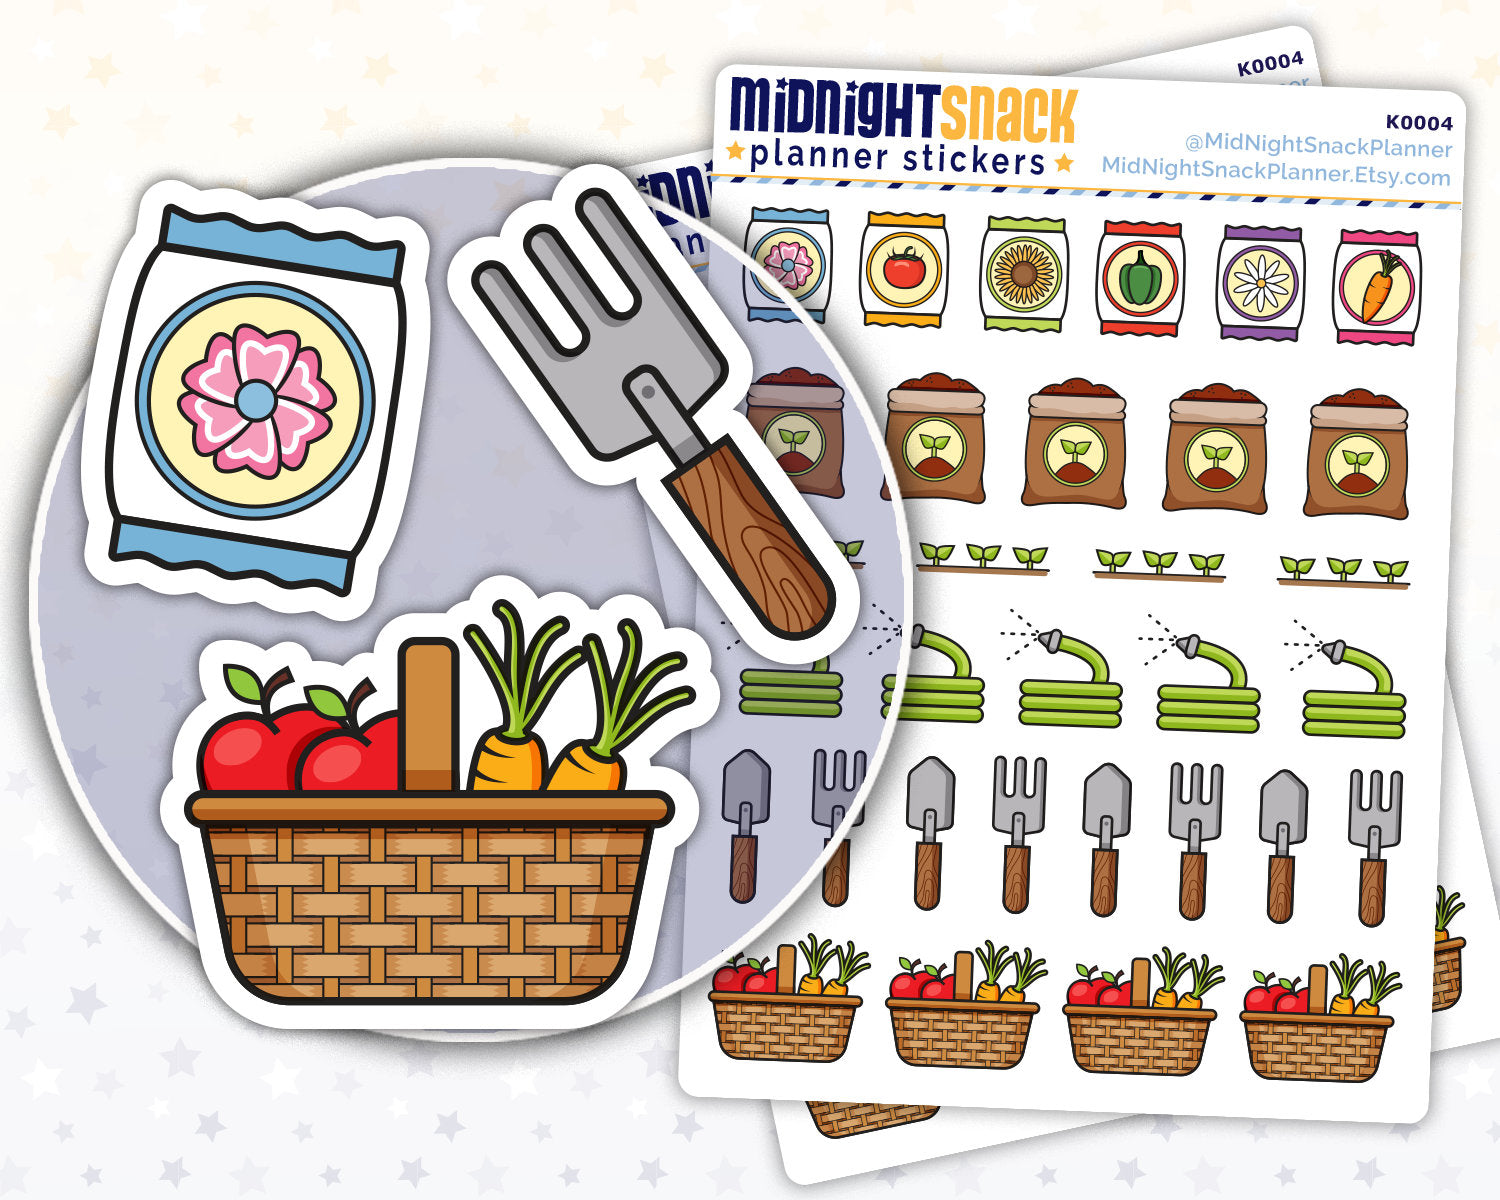 Gardening Sampler Icons: Yard Care Planner Stickers Midnight Snack Planner